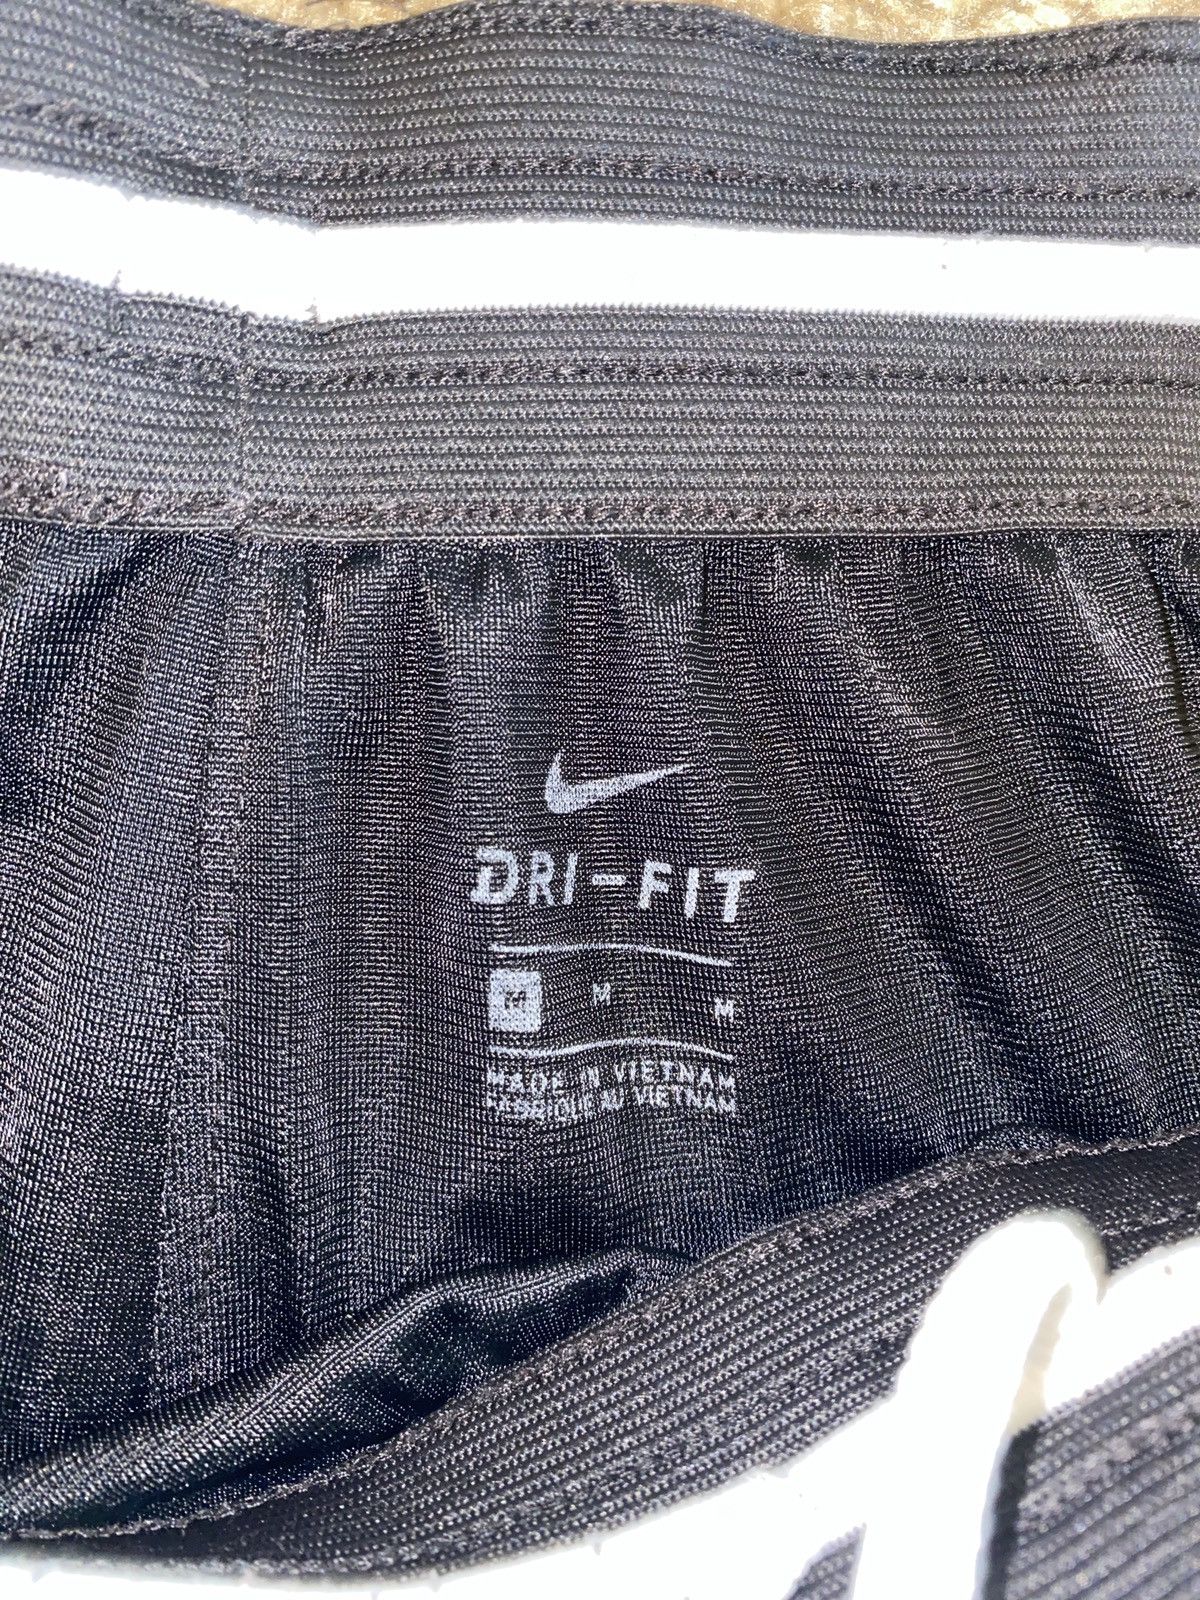 Nike Nike Fly Mesh Shorts Size US 32 / EU 48 - 2 Preview